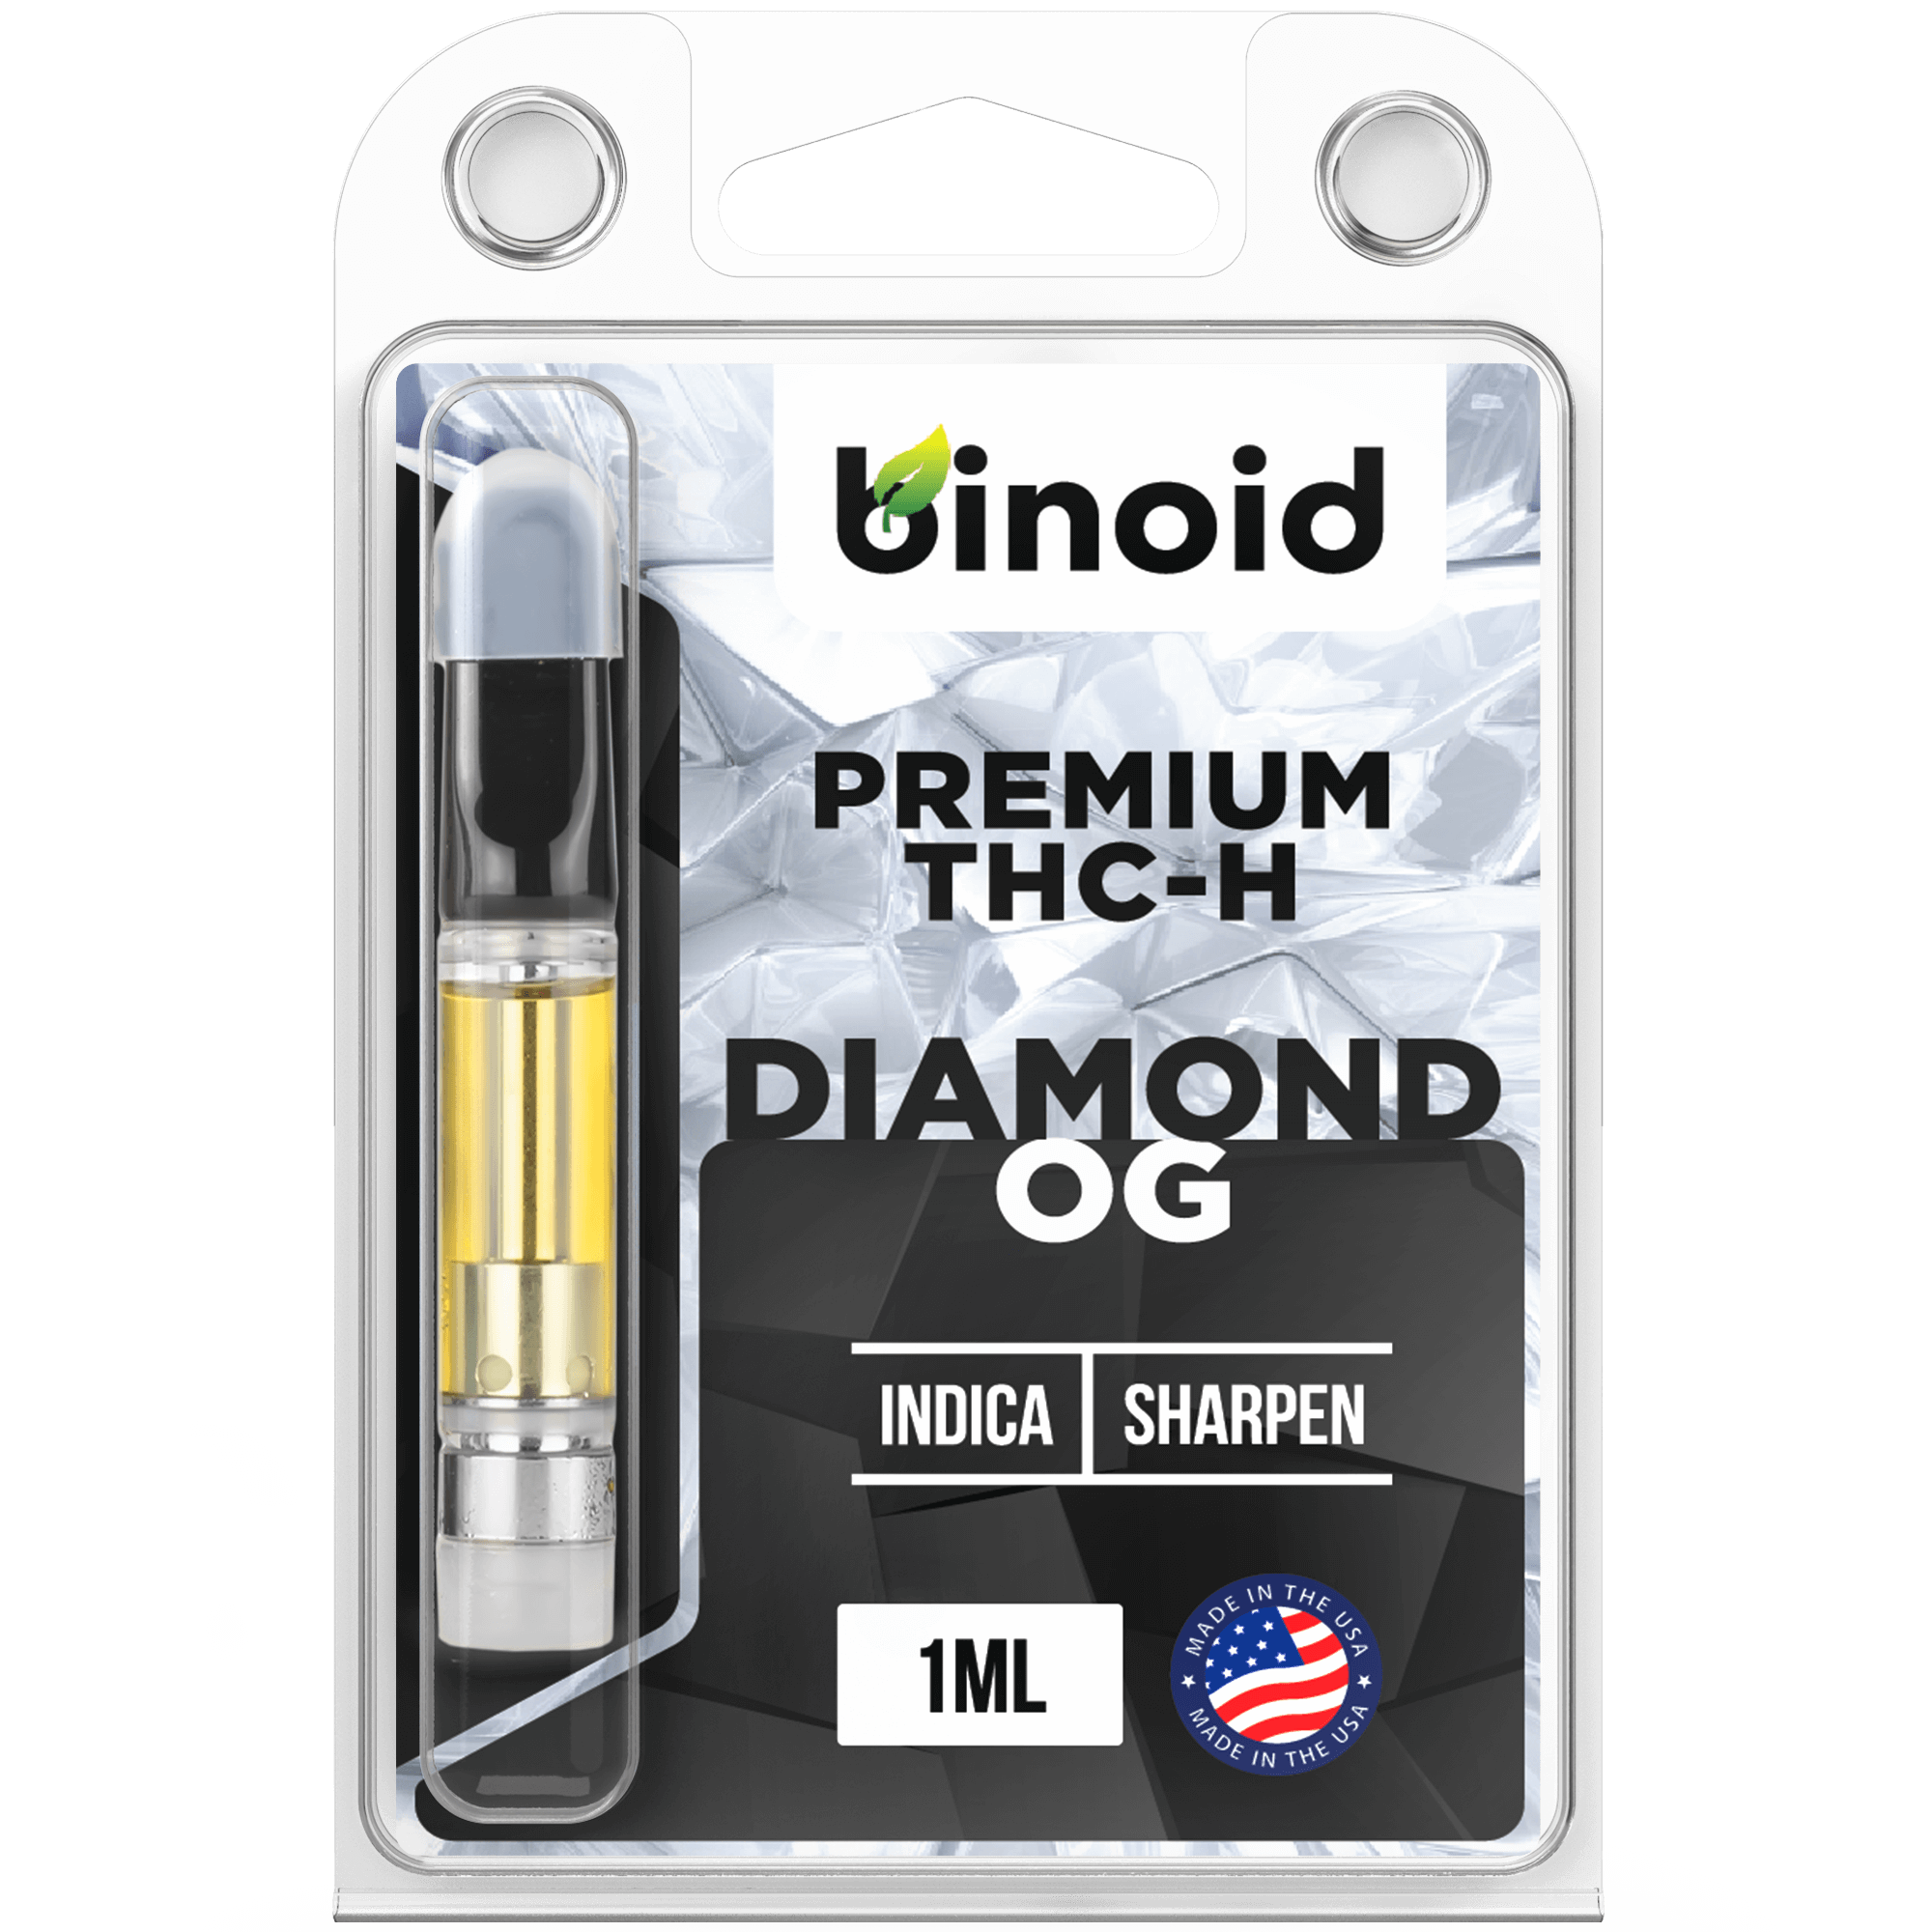 Binoid THC-H Vape Cartridge Best Price